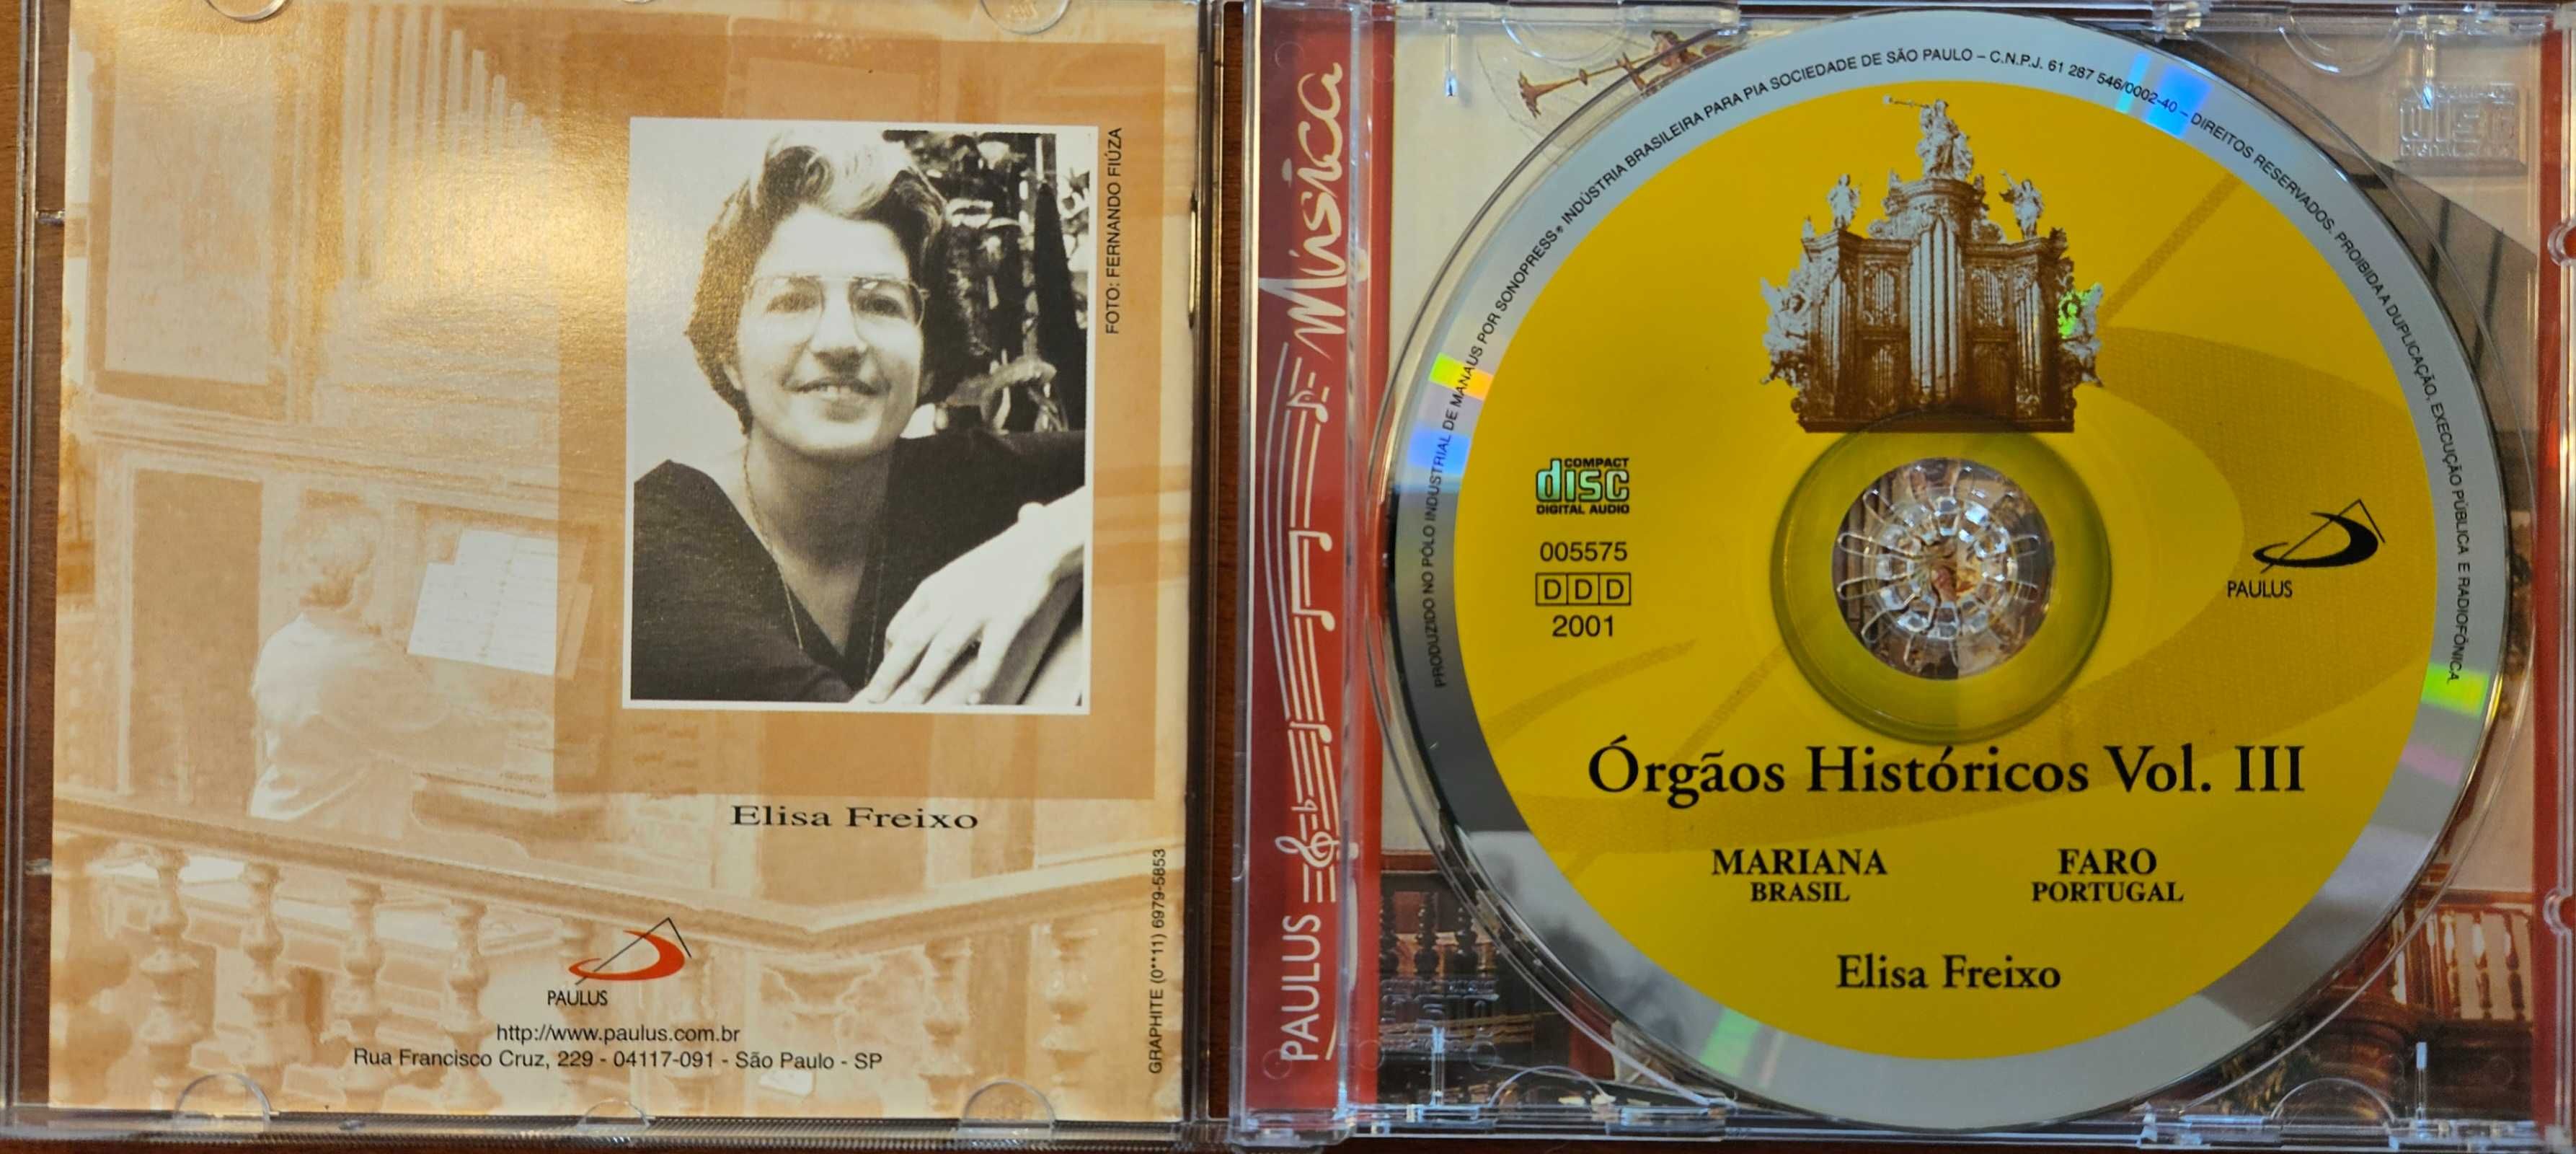 CD - Órgãos Históricos Vol III - Elisa Freixo